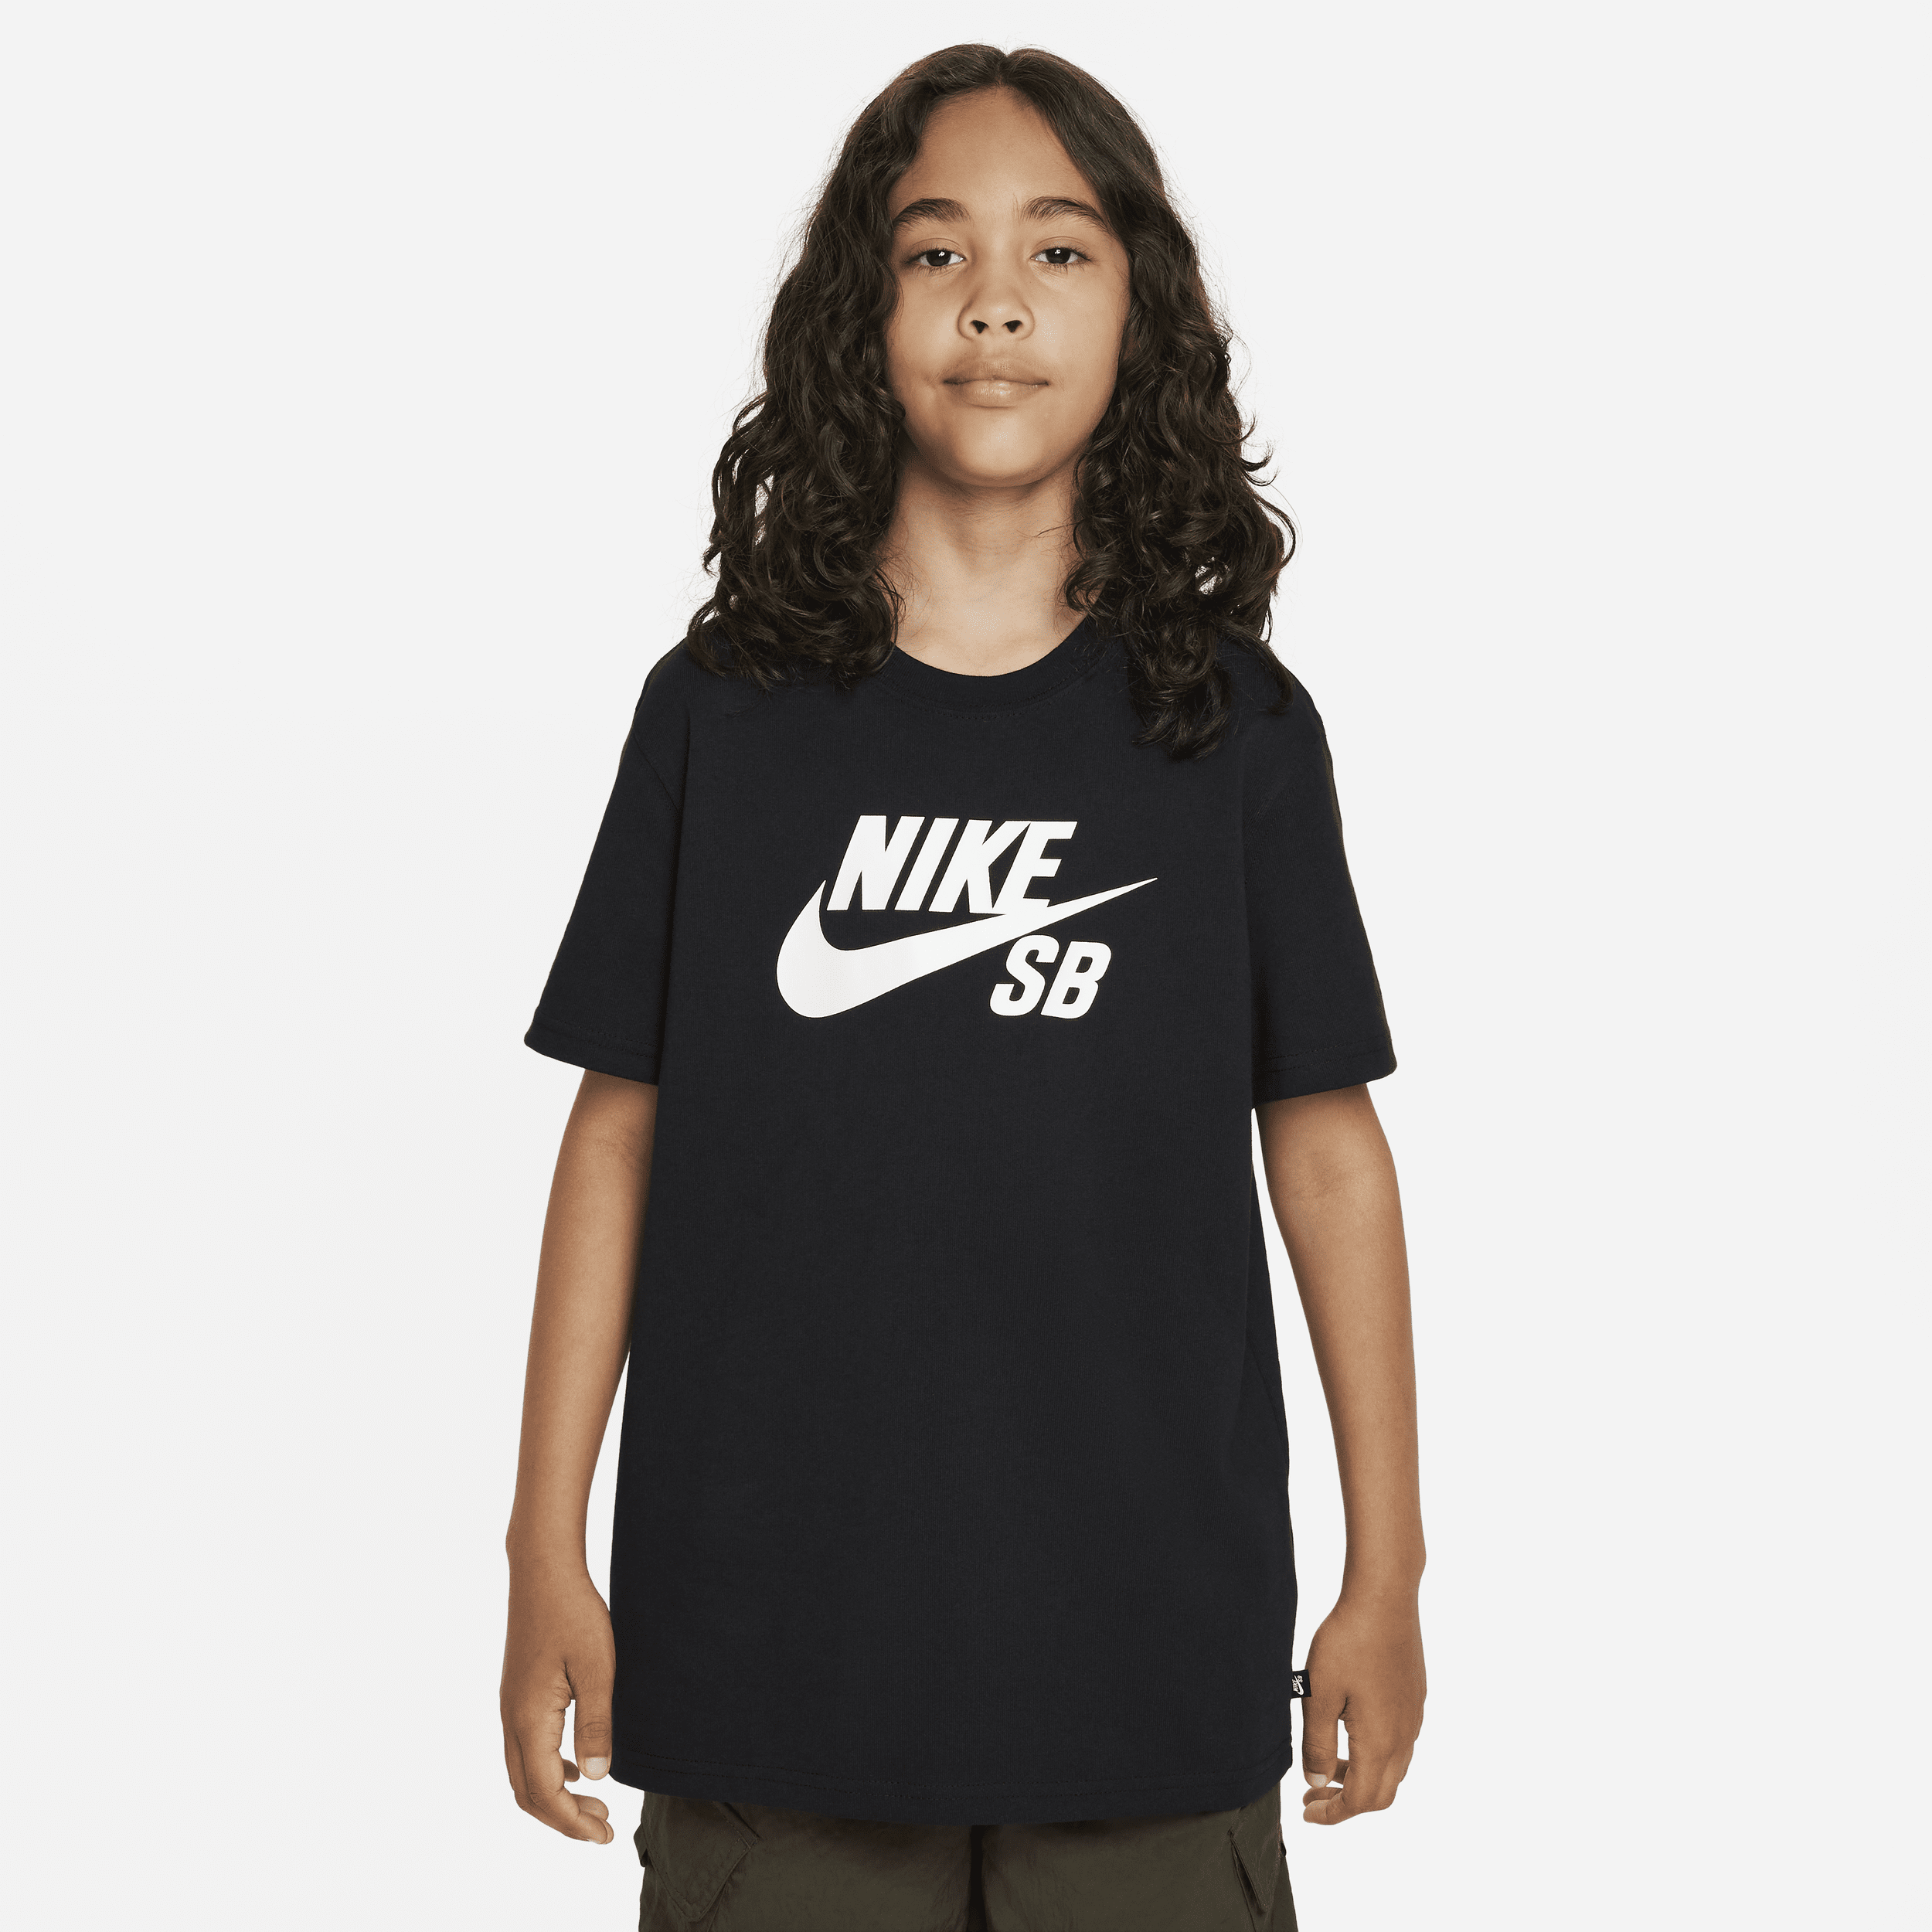 Camiseta Nike SB Infantil